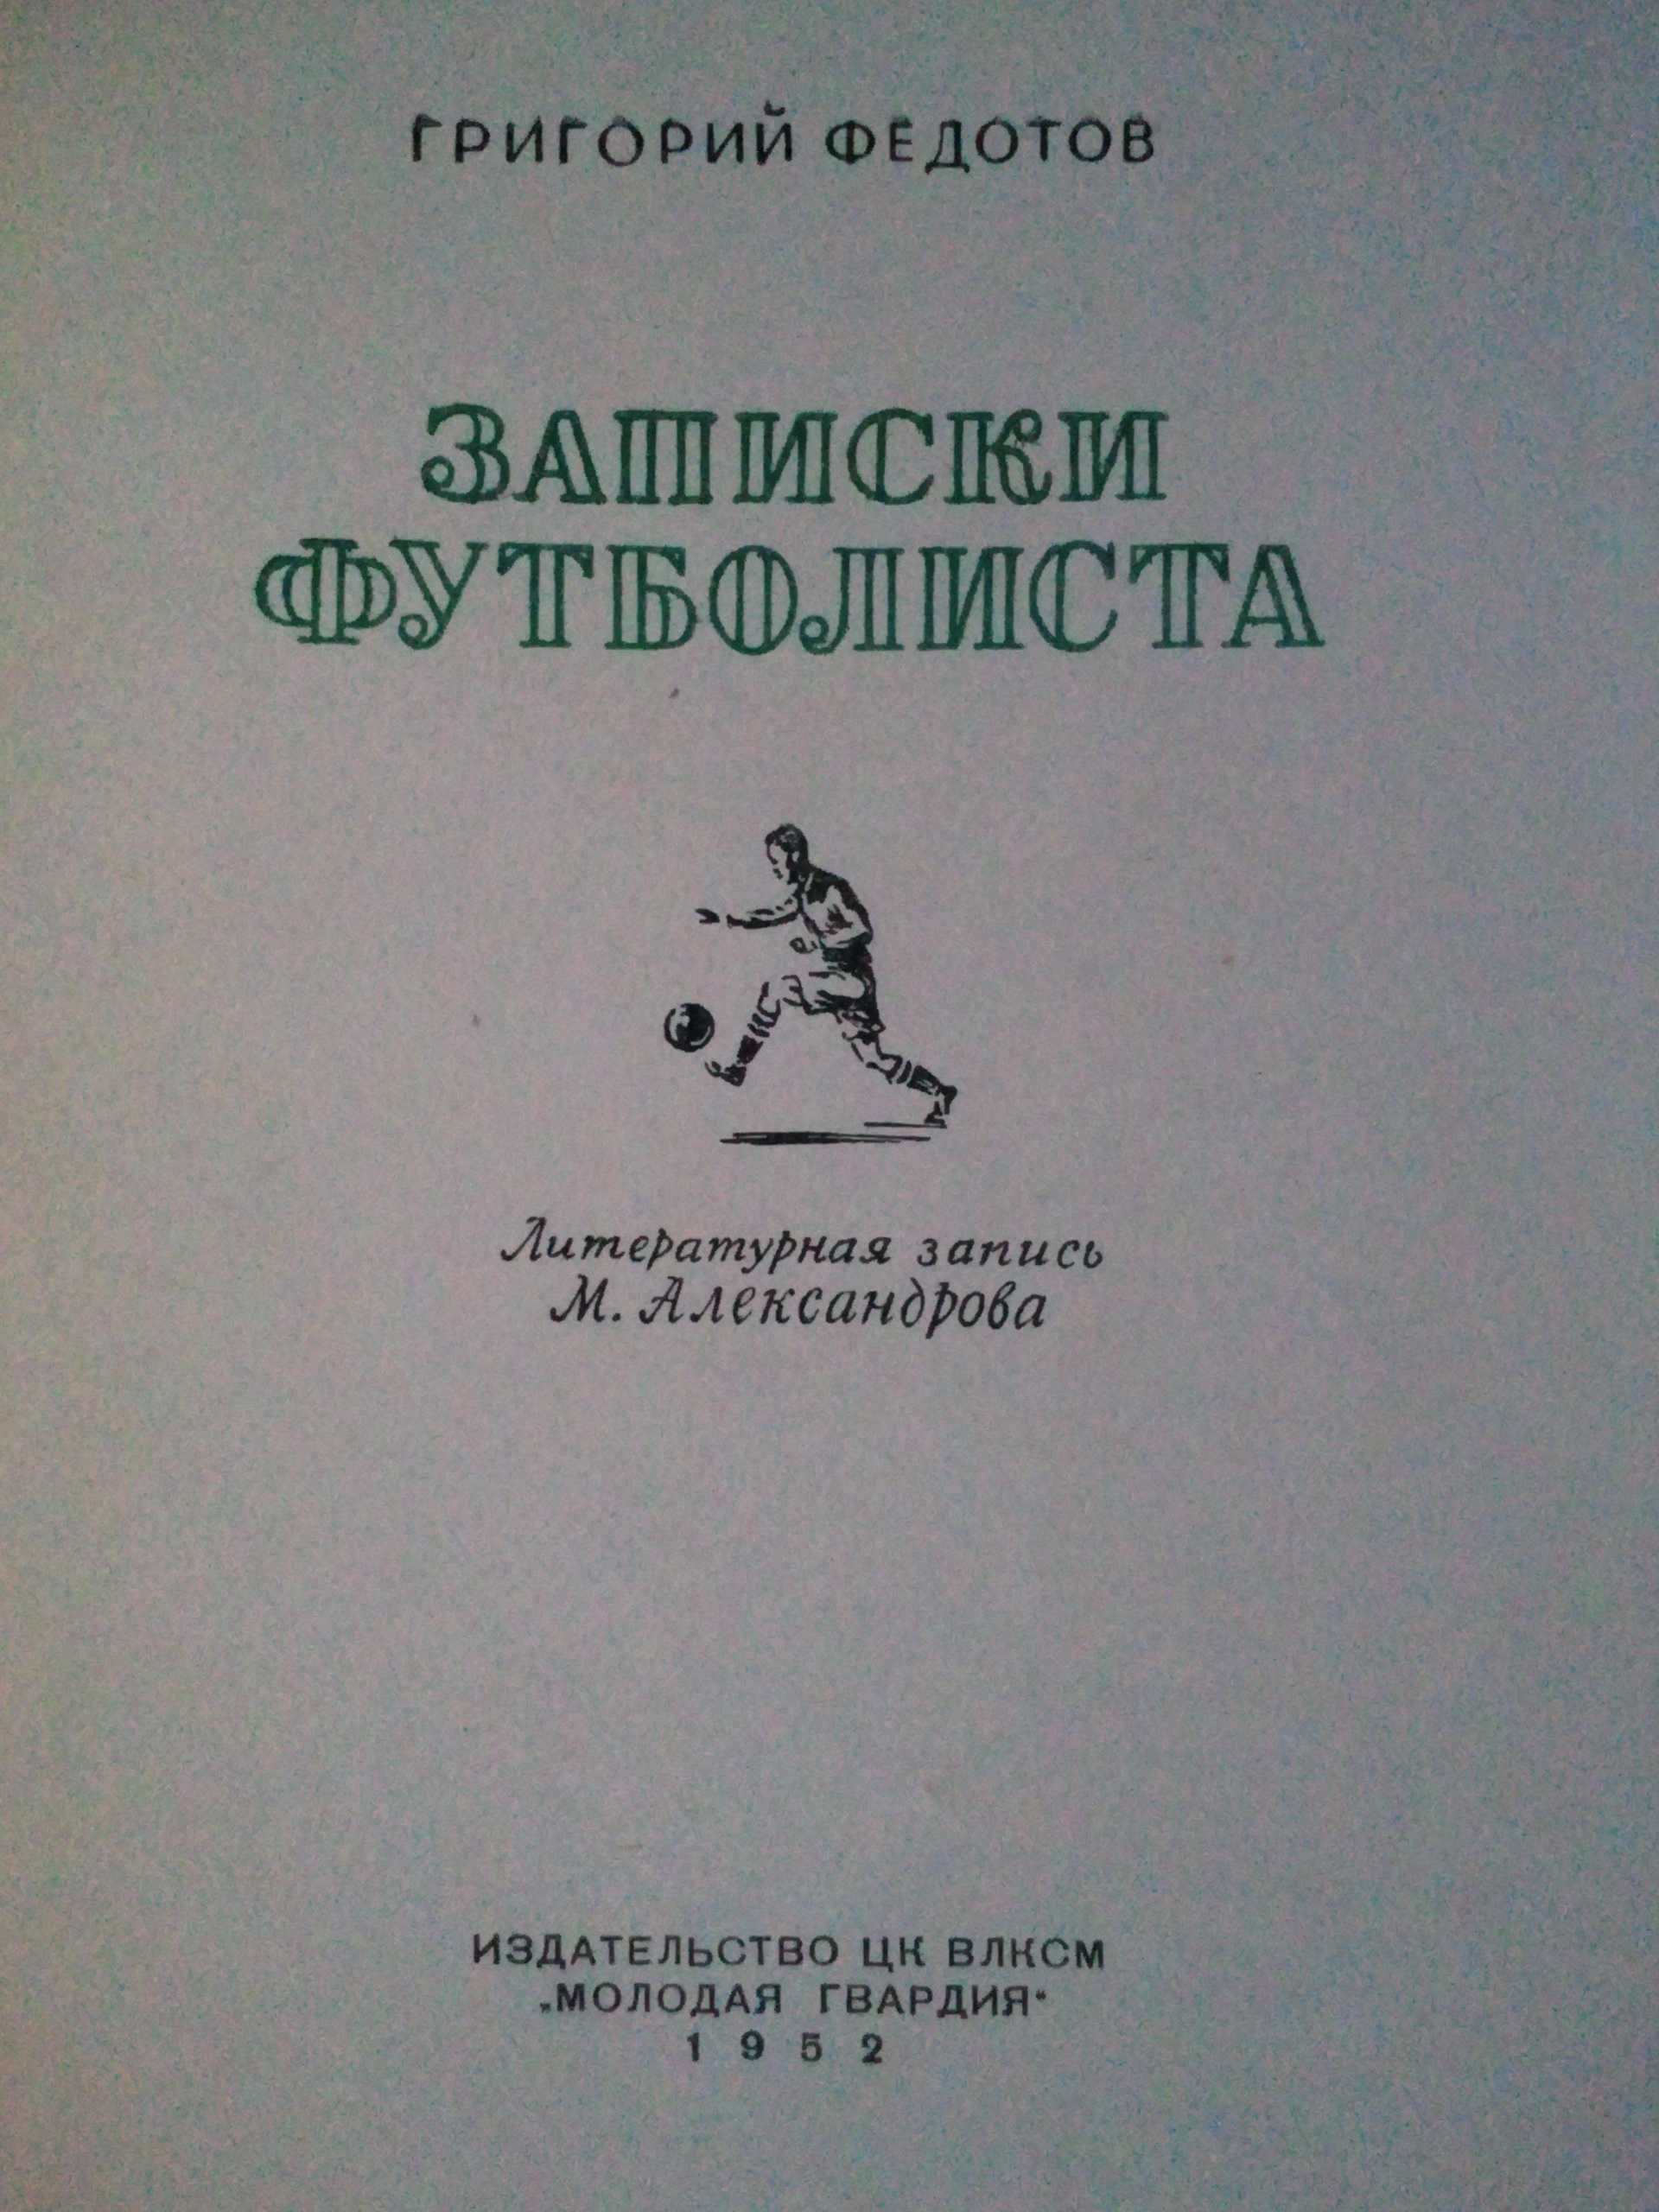 Записки футболиста. Г. Федотов. 1952 г.